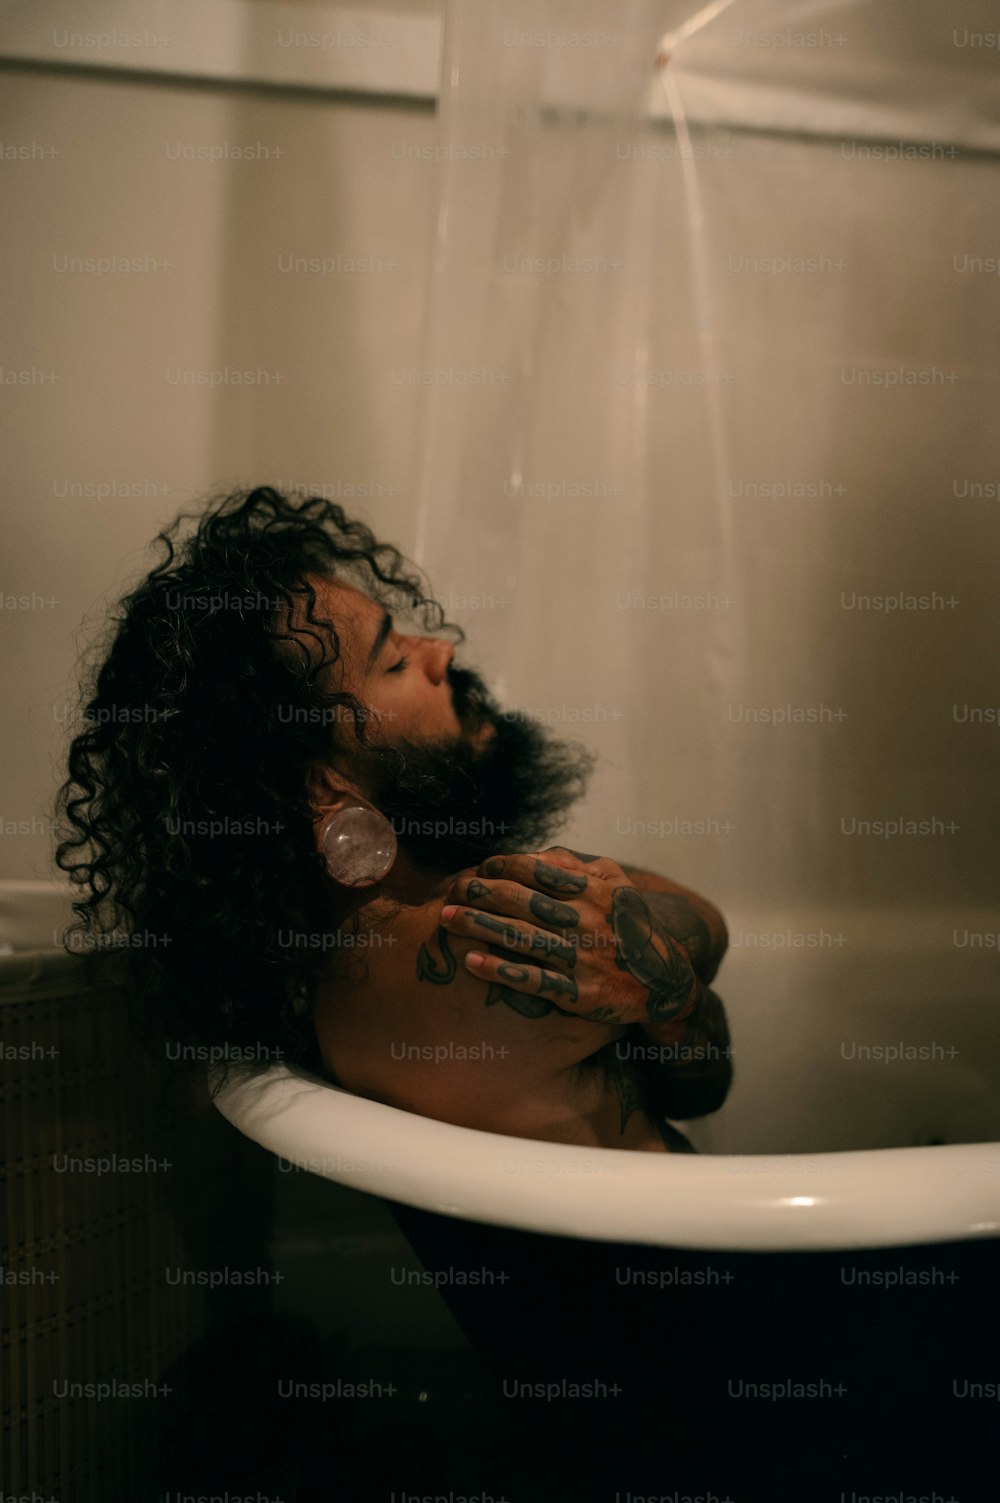 Un hombre en una bañera cubierta de tatuajes